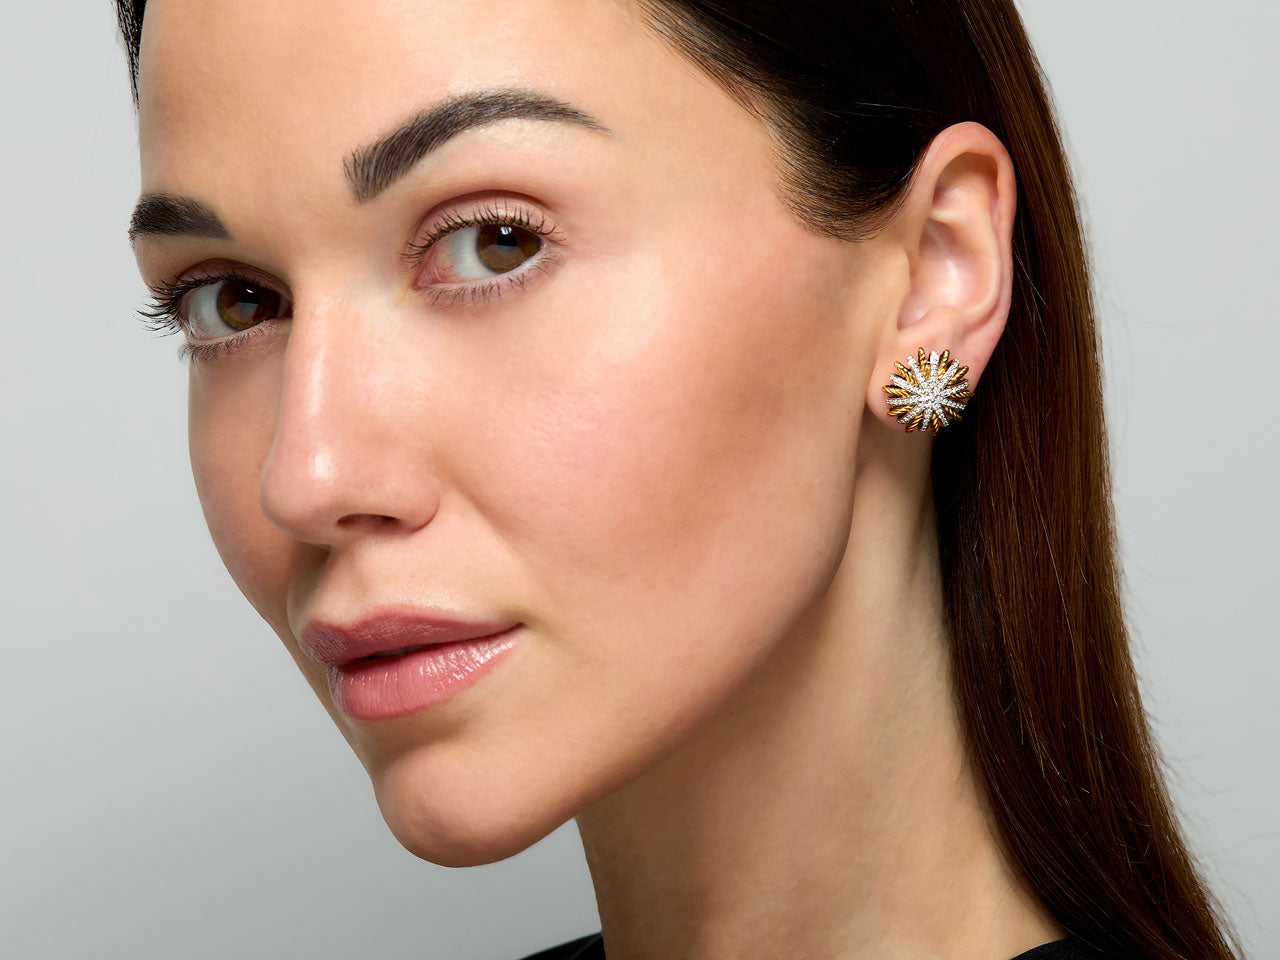 David Yurman 'Starburst' Diamond Earrings in 18K Gold